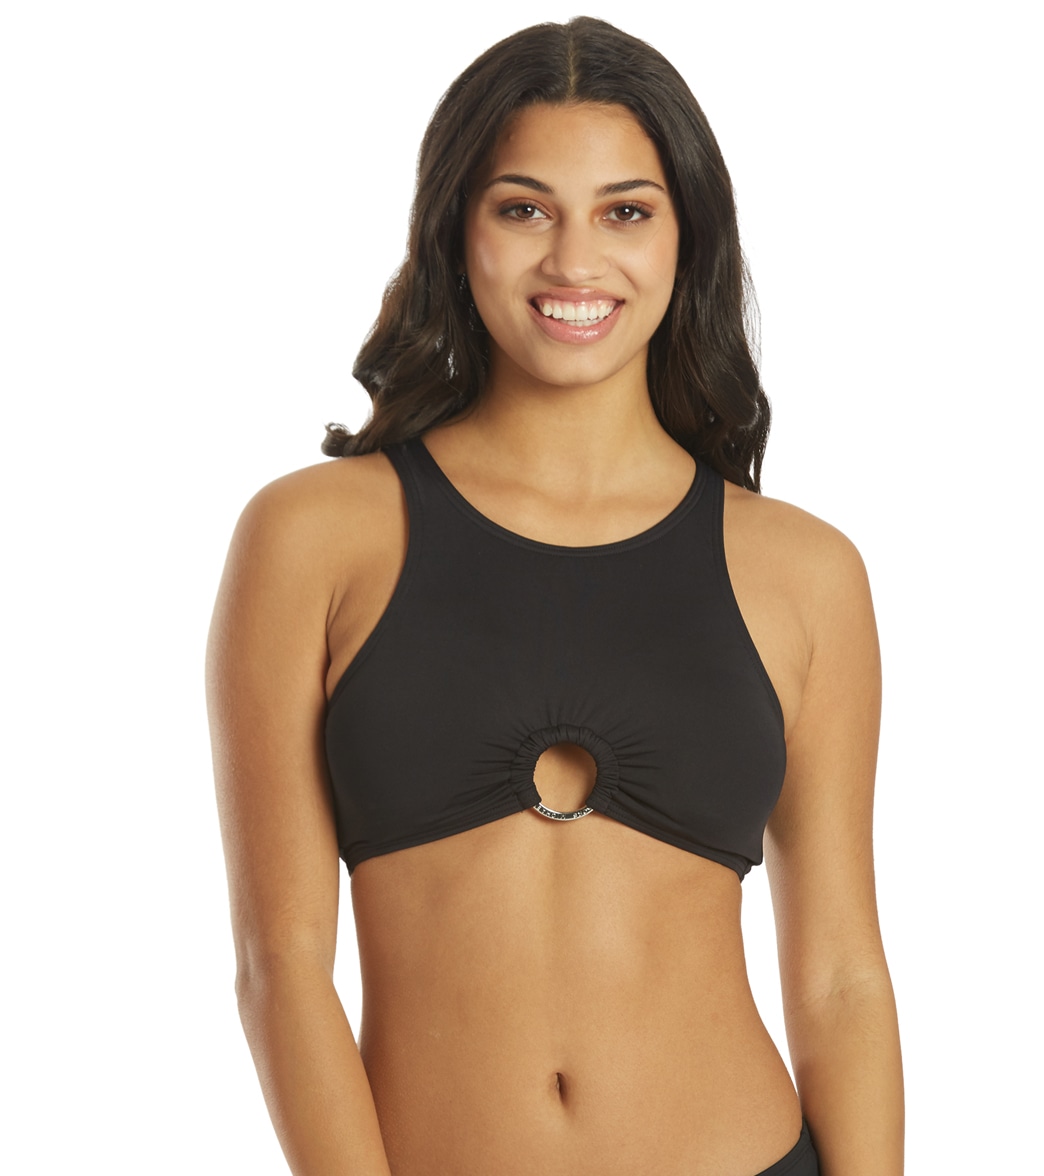 Michael Kors Women's Iconic Solid Cropped Bikini Top - Black Large - Swimoutlet.com